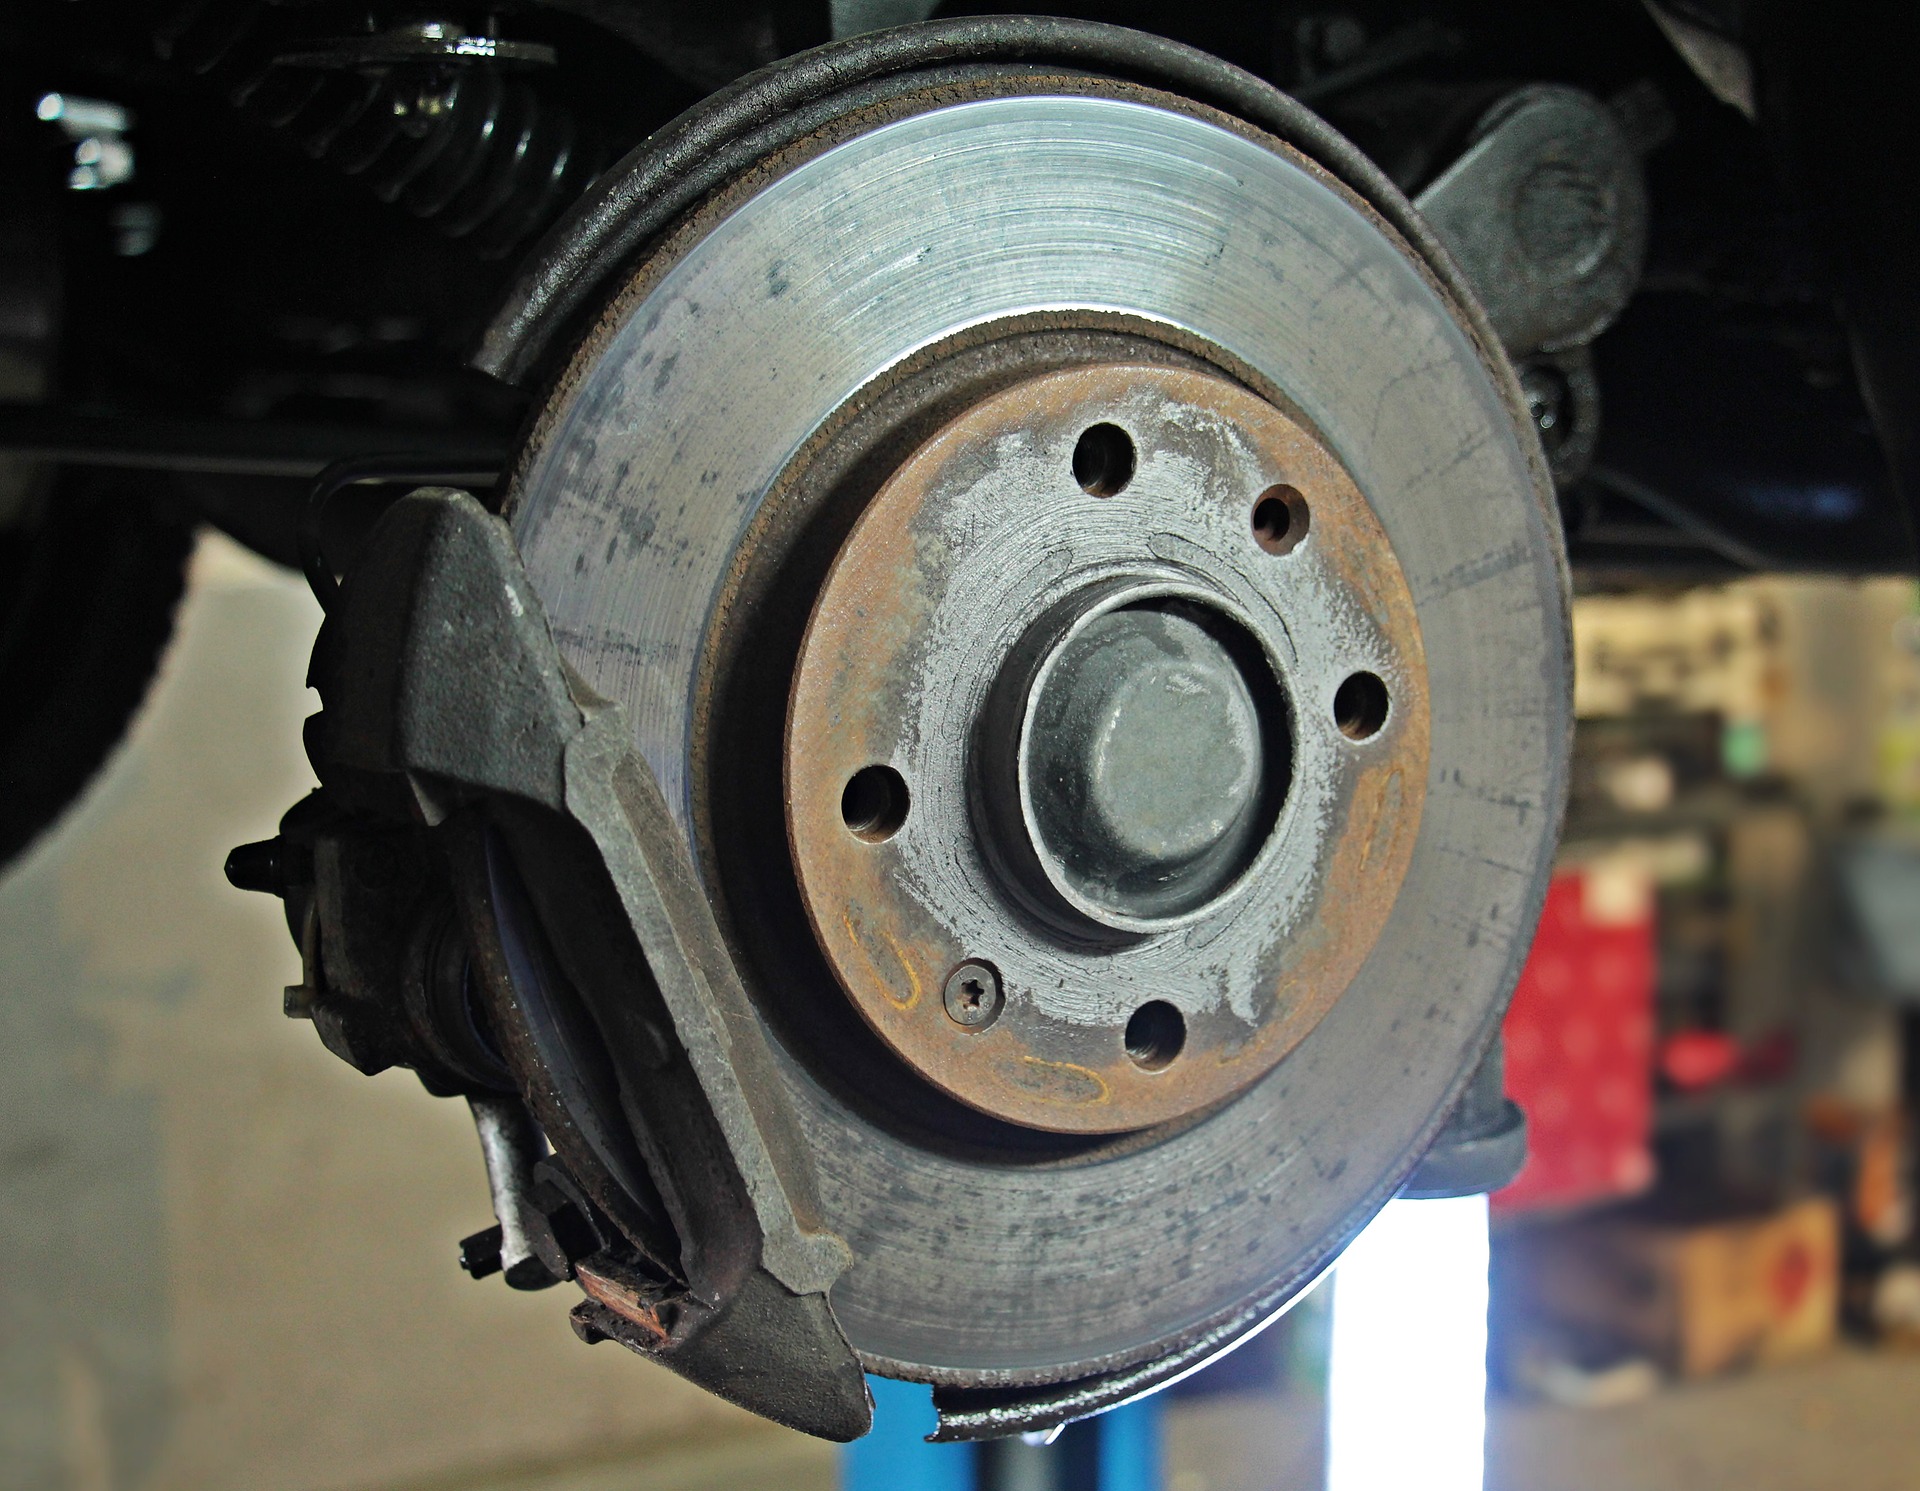 The brake mechanic of a car wheel